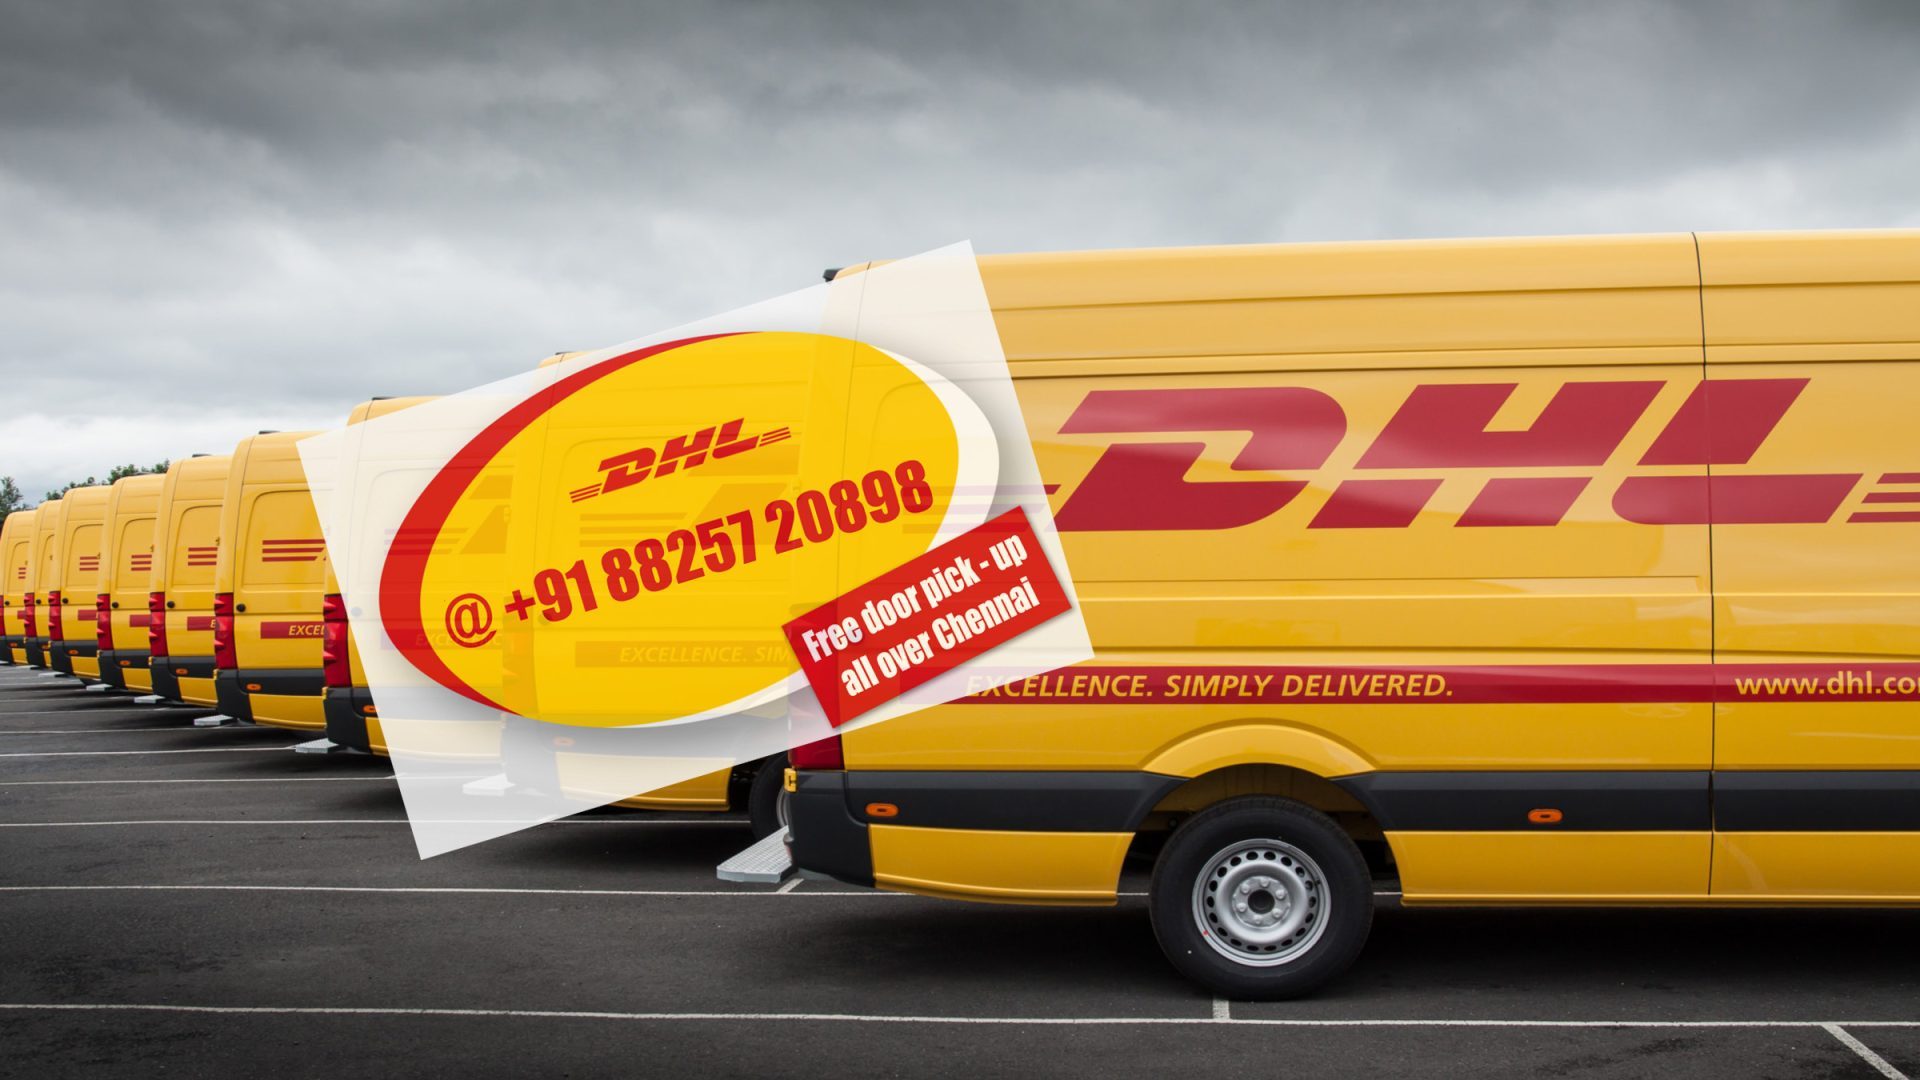 DHL International Courier Chennai Free Pick-up @ + 91 8825720898